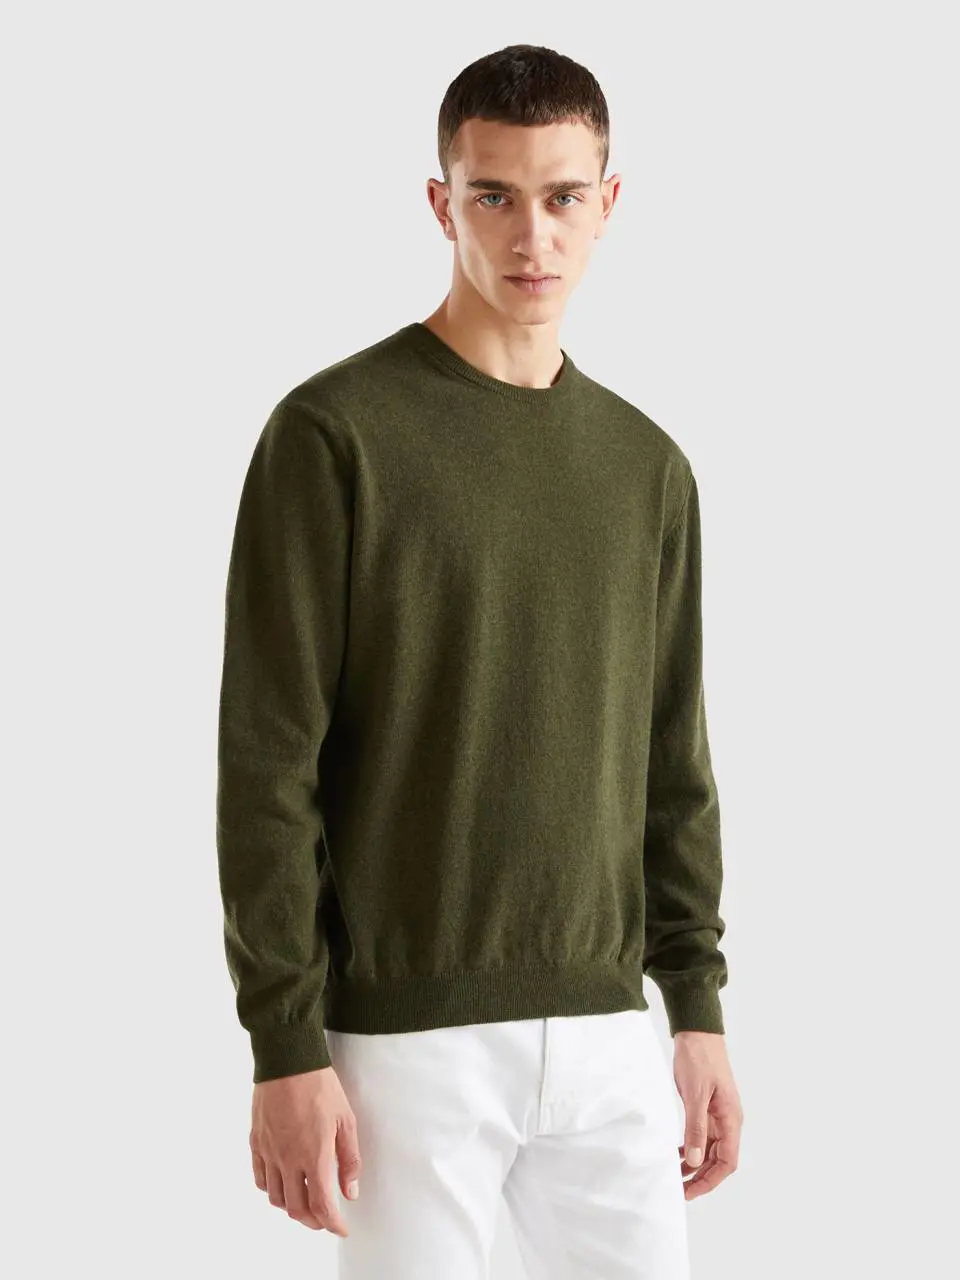 Benetton military green crew neck sweater in pure merino wool. 1